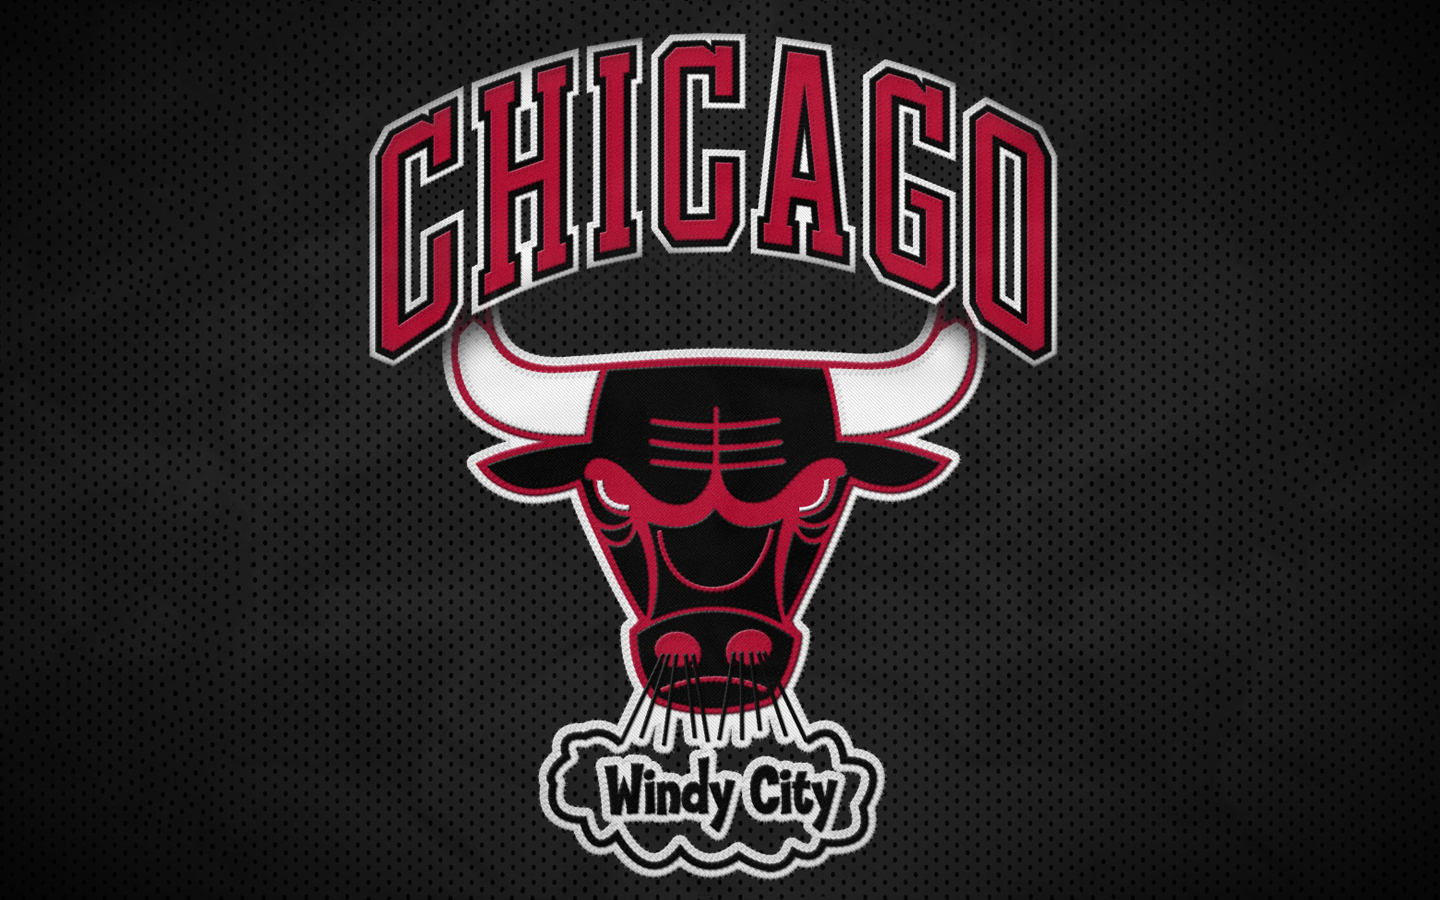 Chicago Bulls Desktop Wallpaper